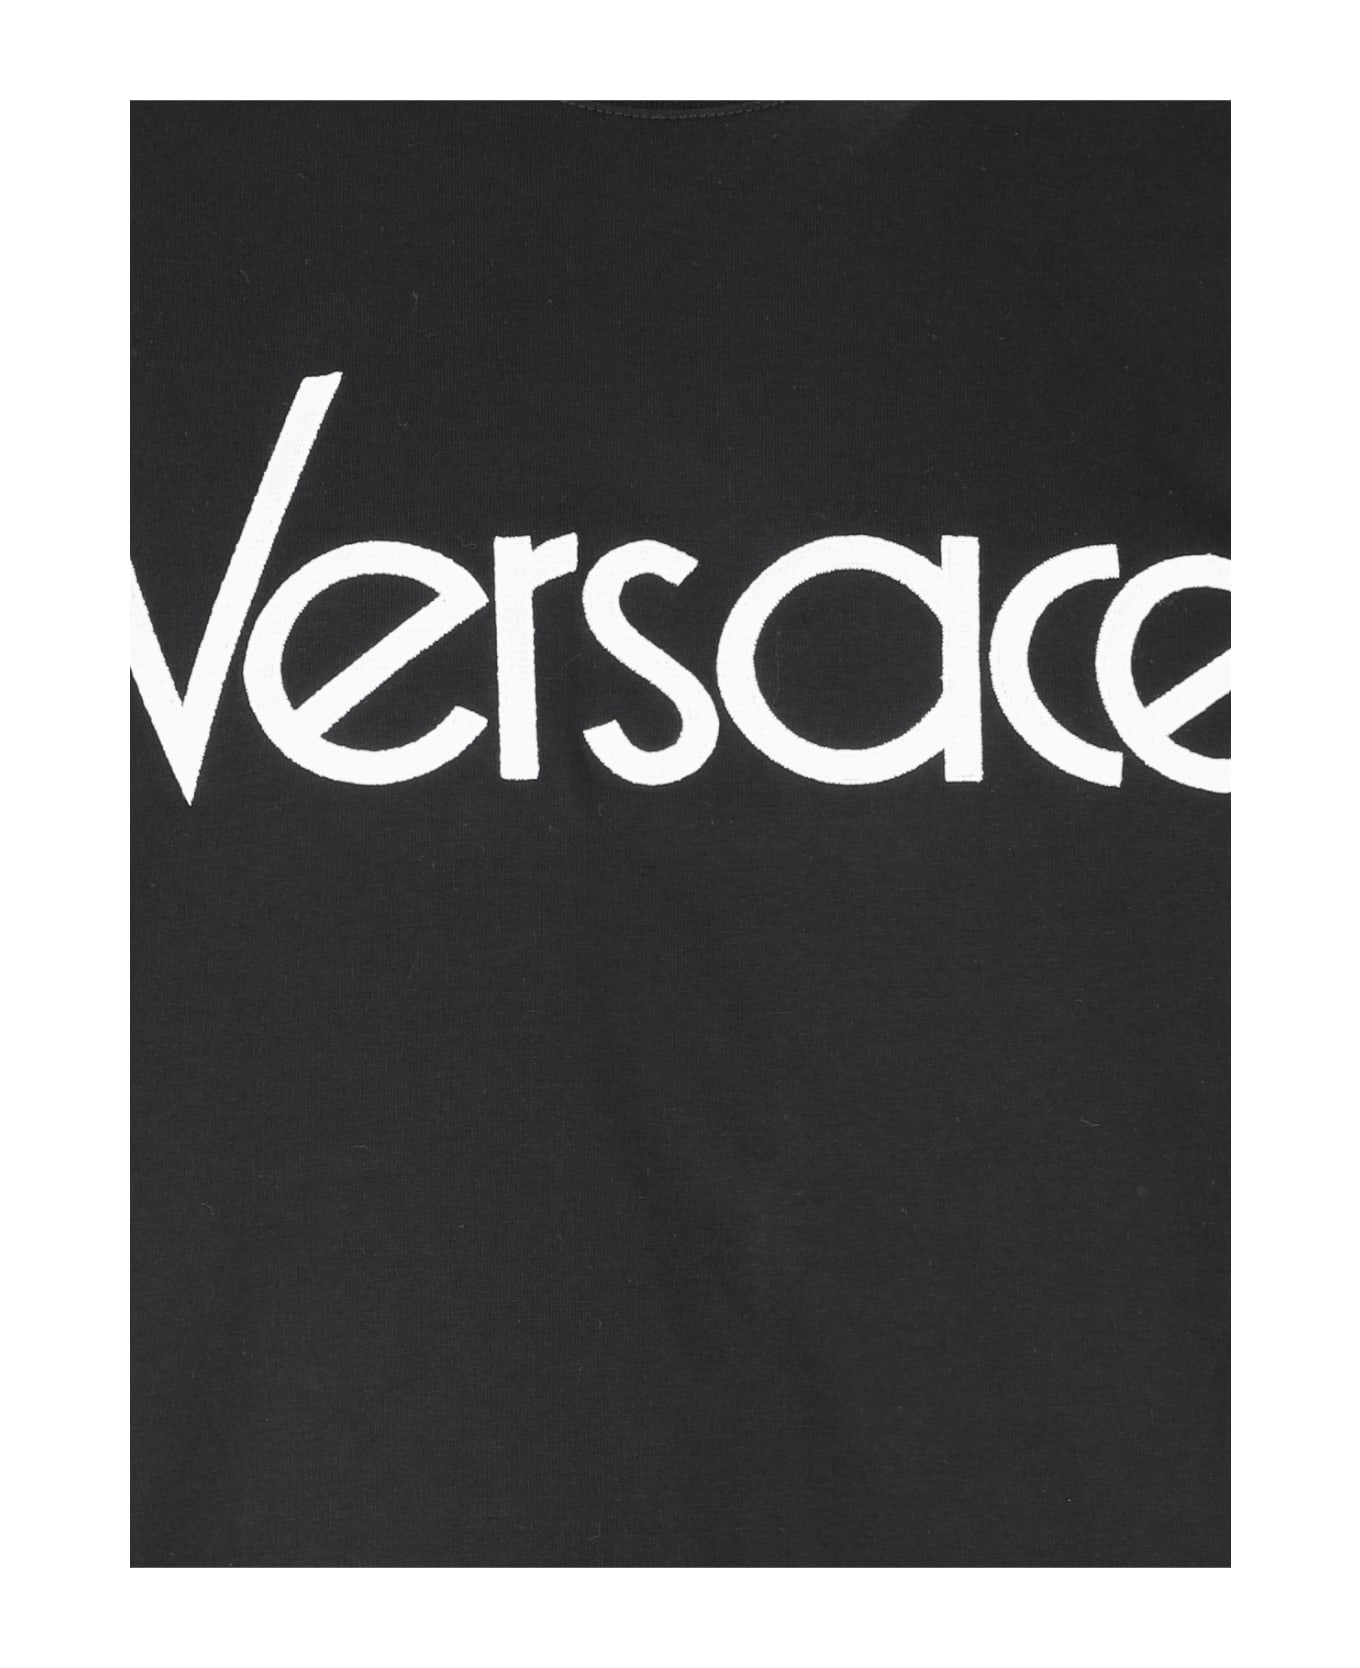 Versace Logo T-shirt - Black シャツ